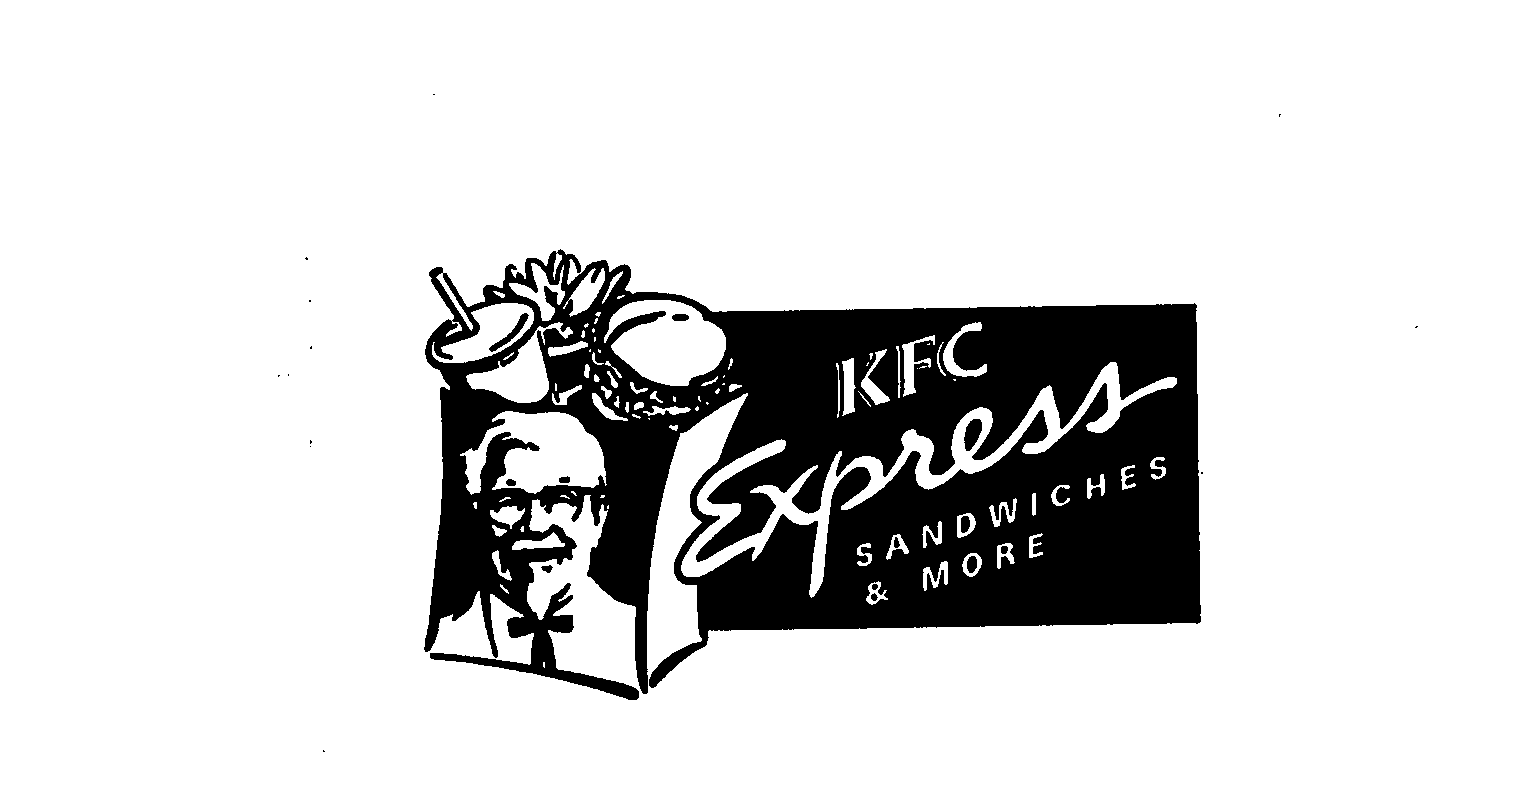  KFC EXPRESS SANDWICHES &amp; MORE